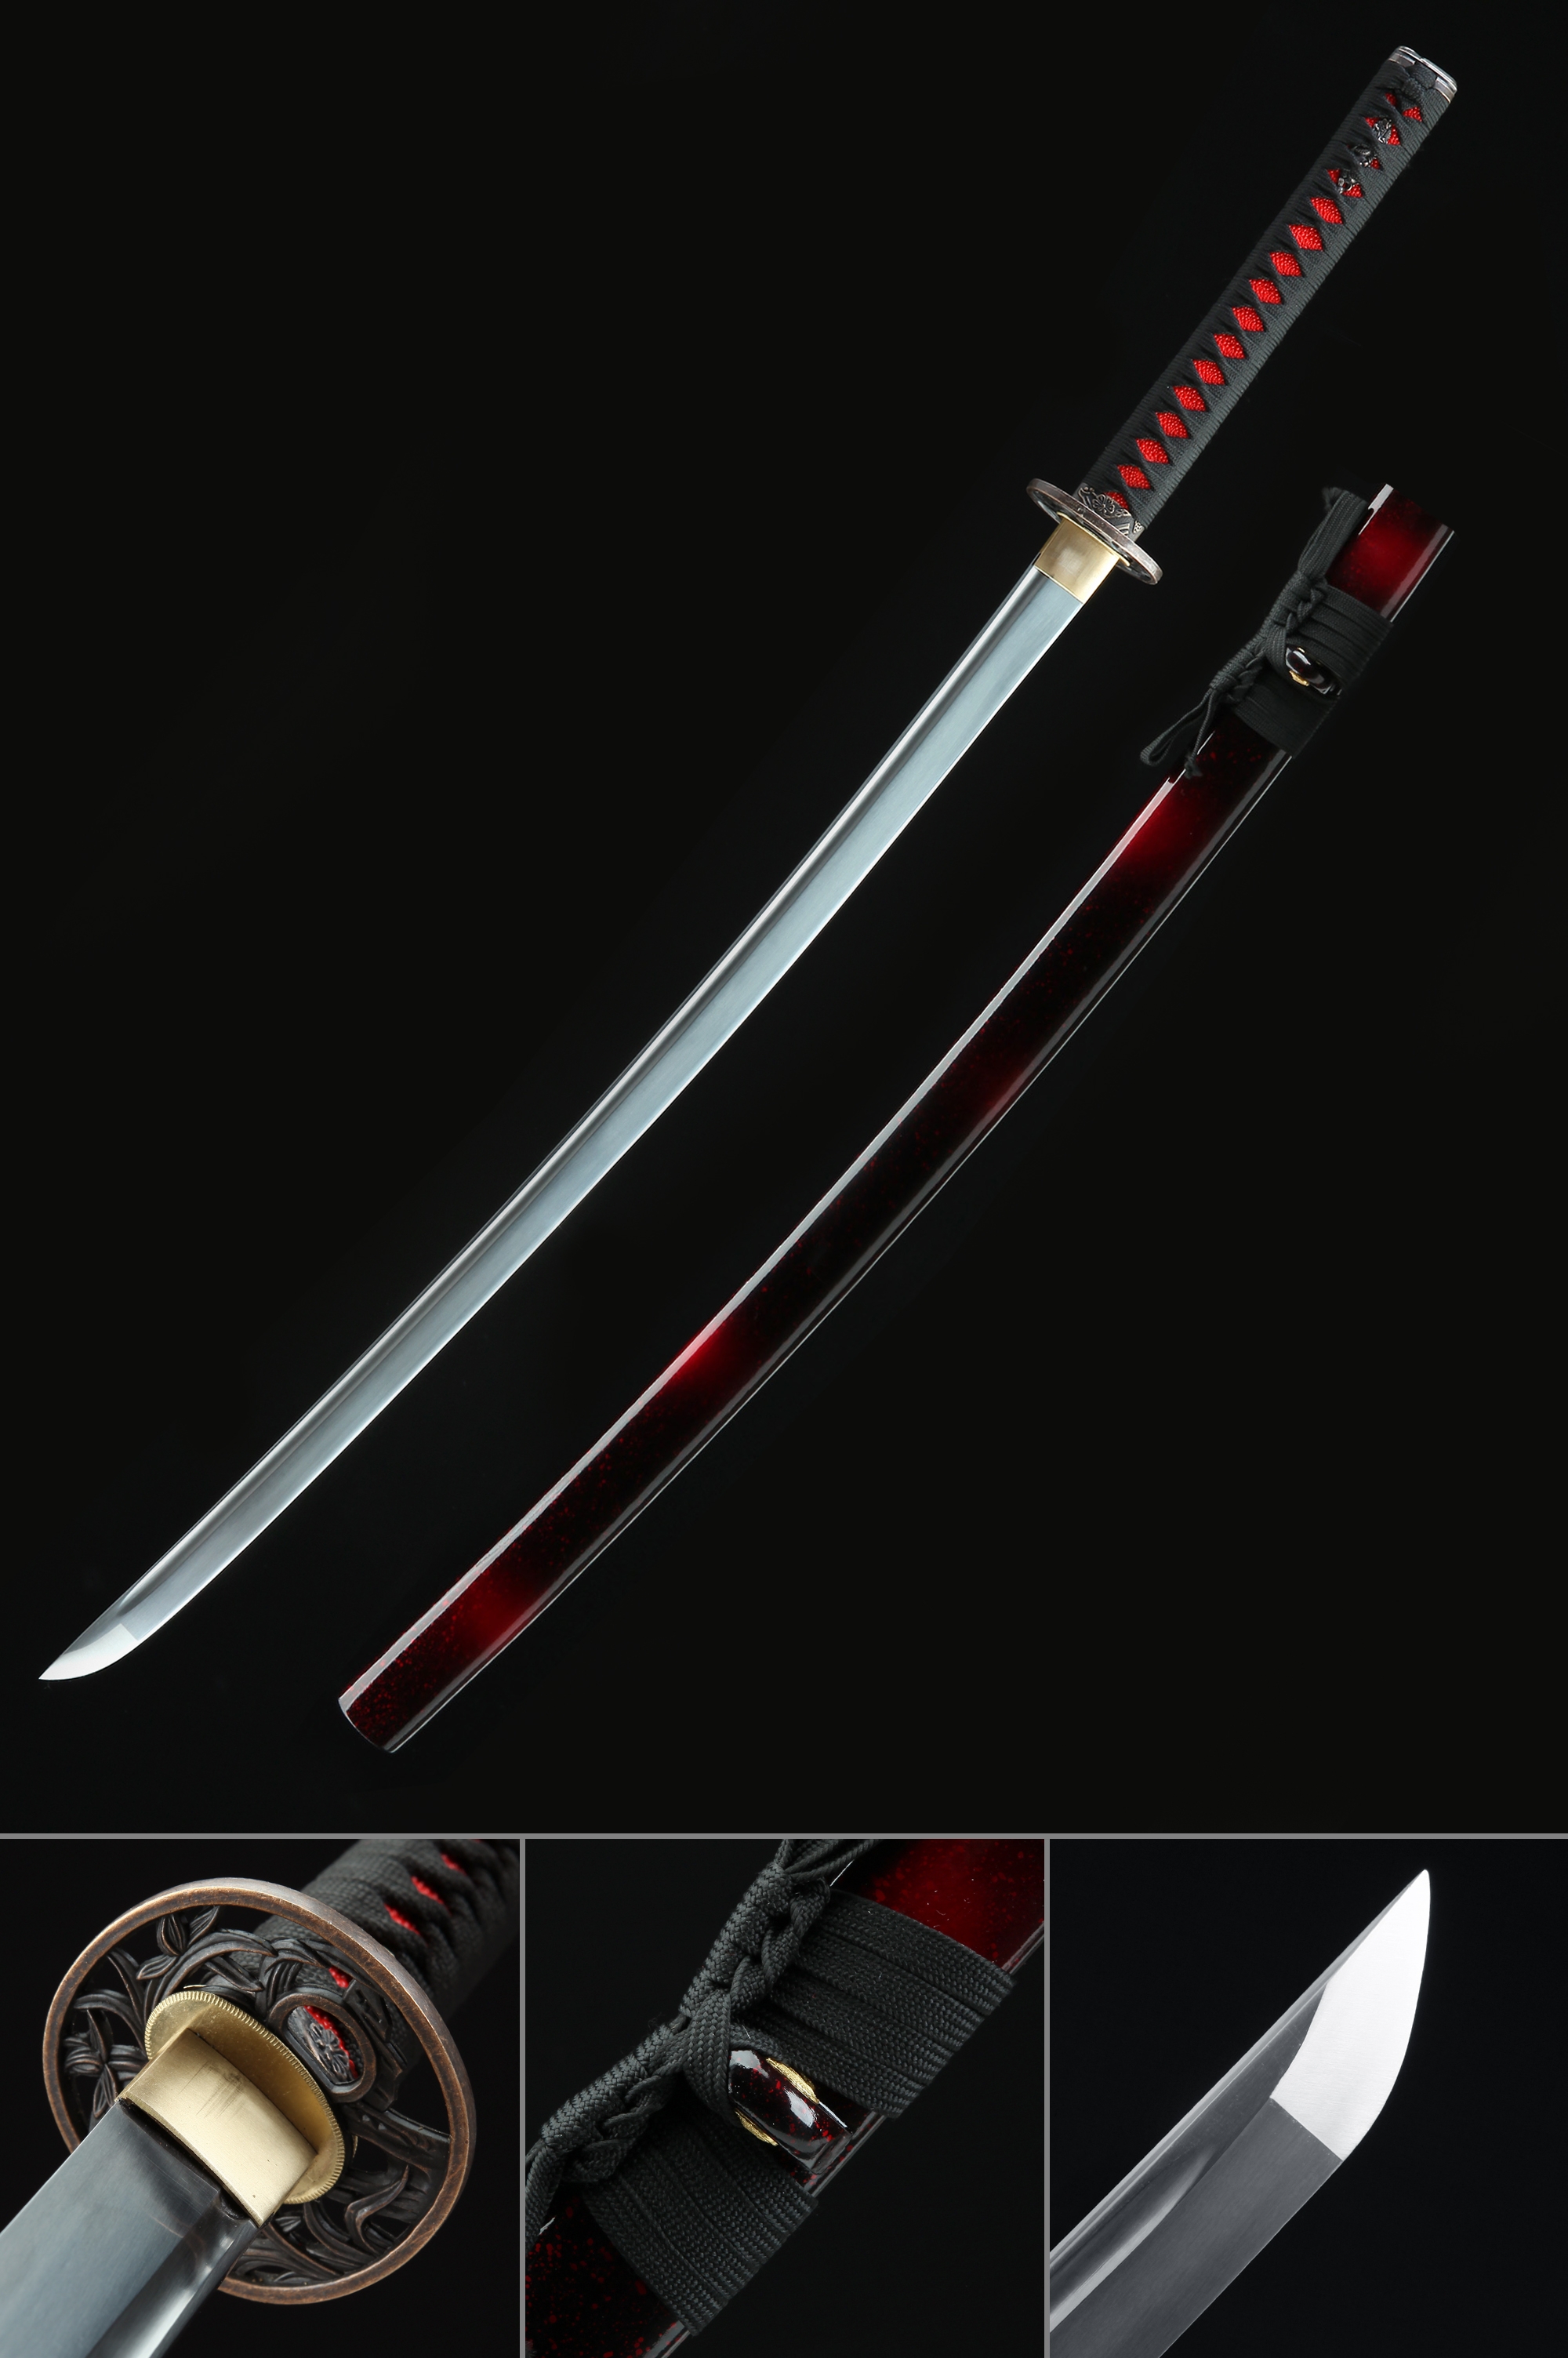 Details about   Katana Japanese Samurai Sword 1045 Carbon Steel Sharp Edge Hand Forged Battle 